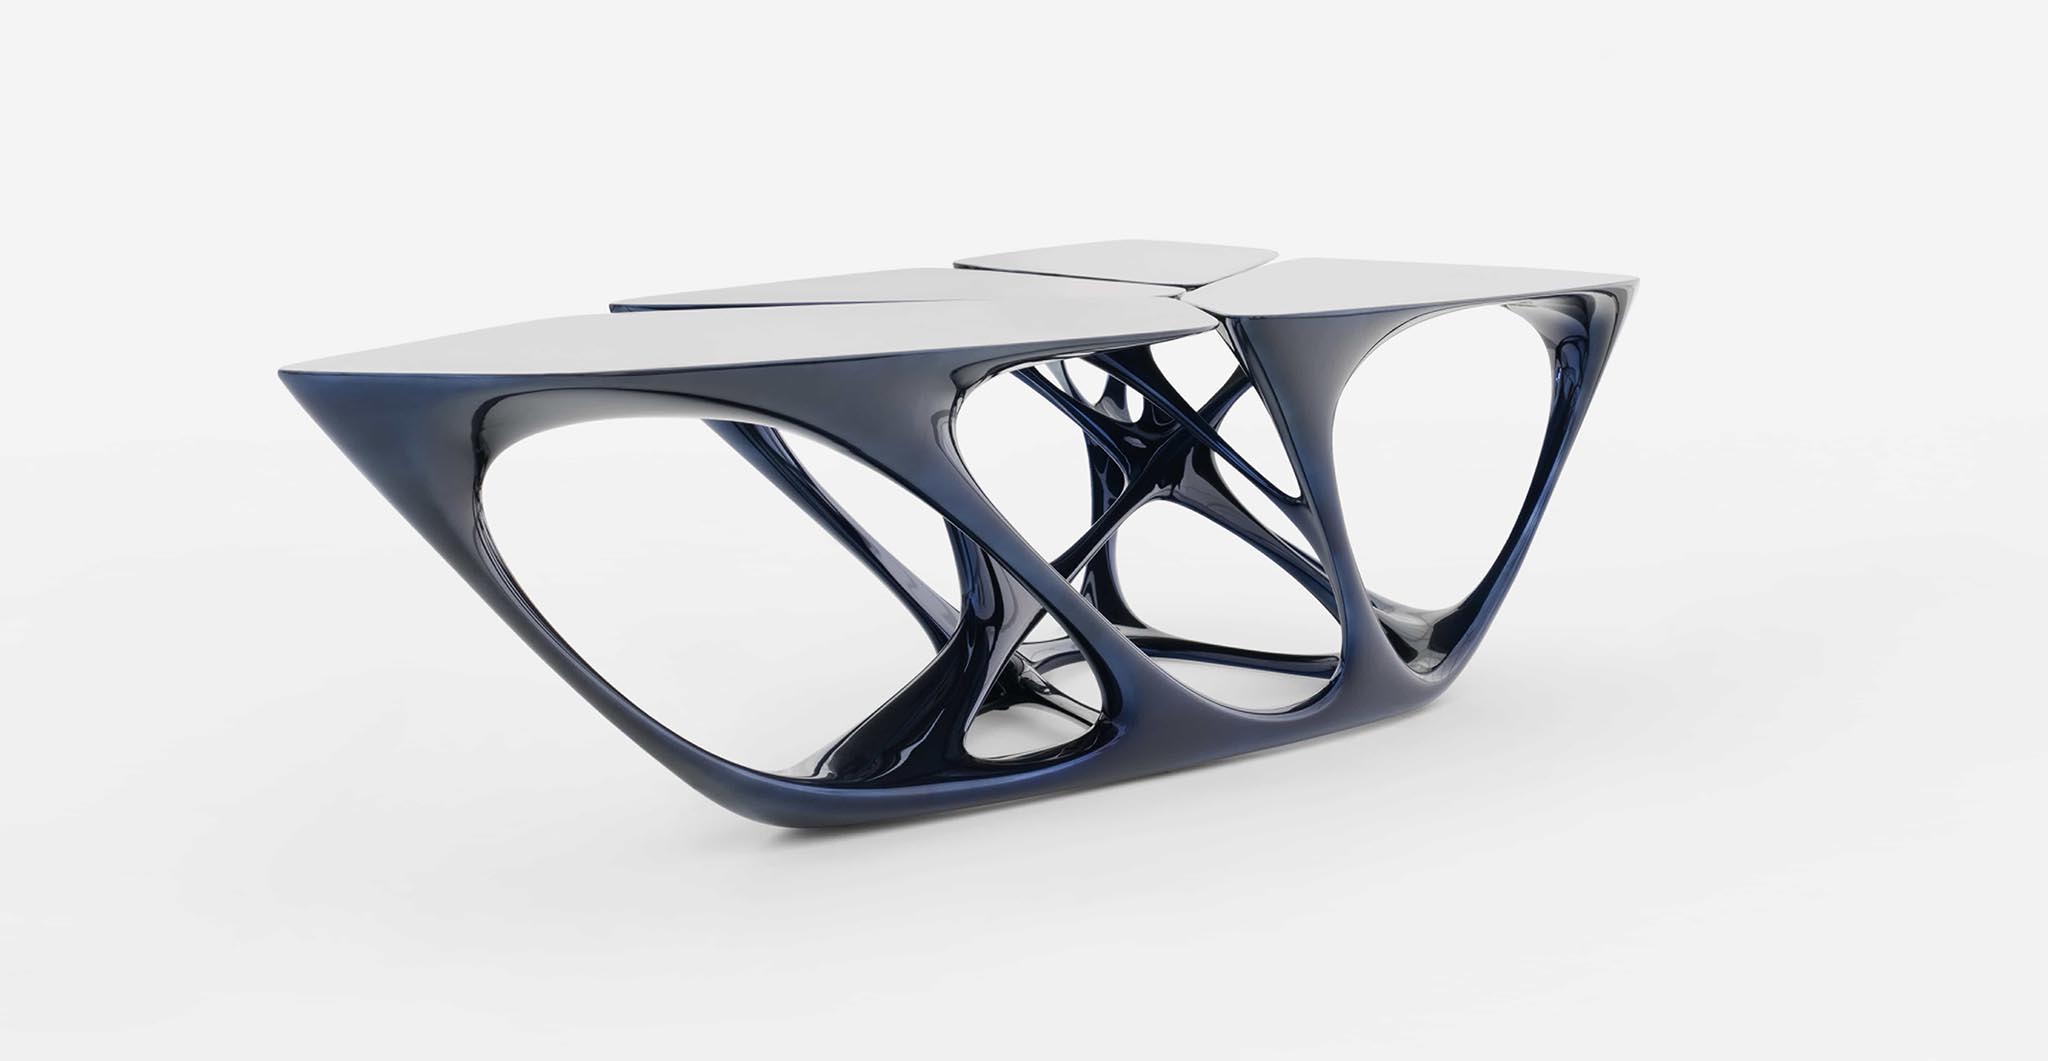 black architectural polyurethane and fiberglass table by Zaha Hadid